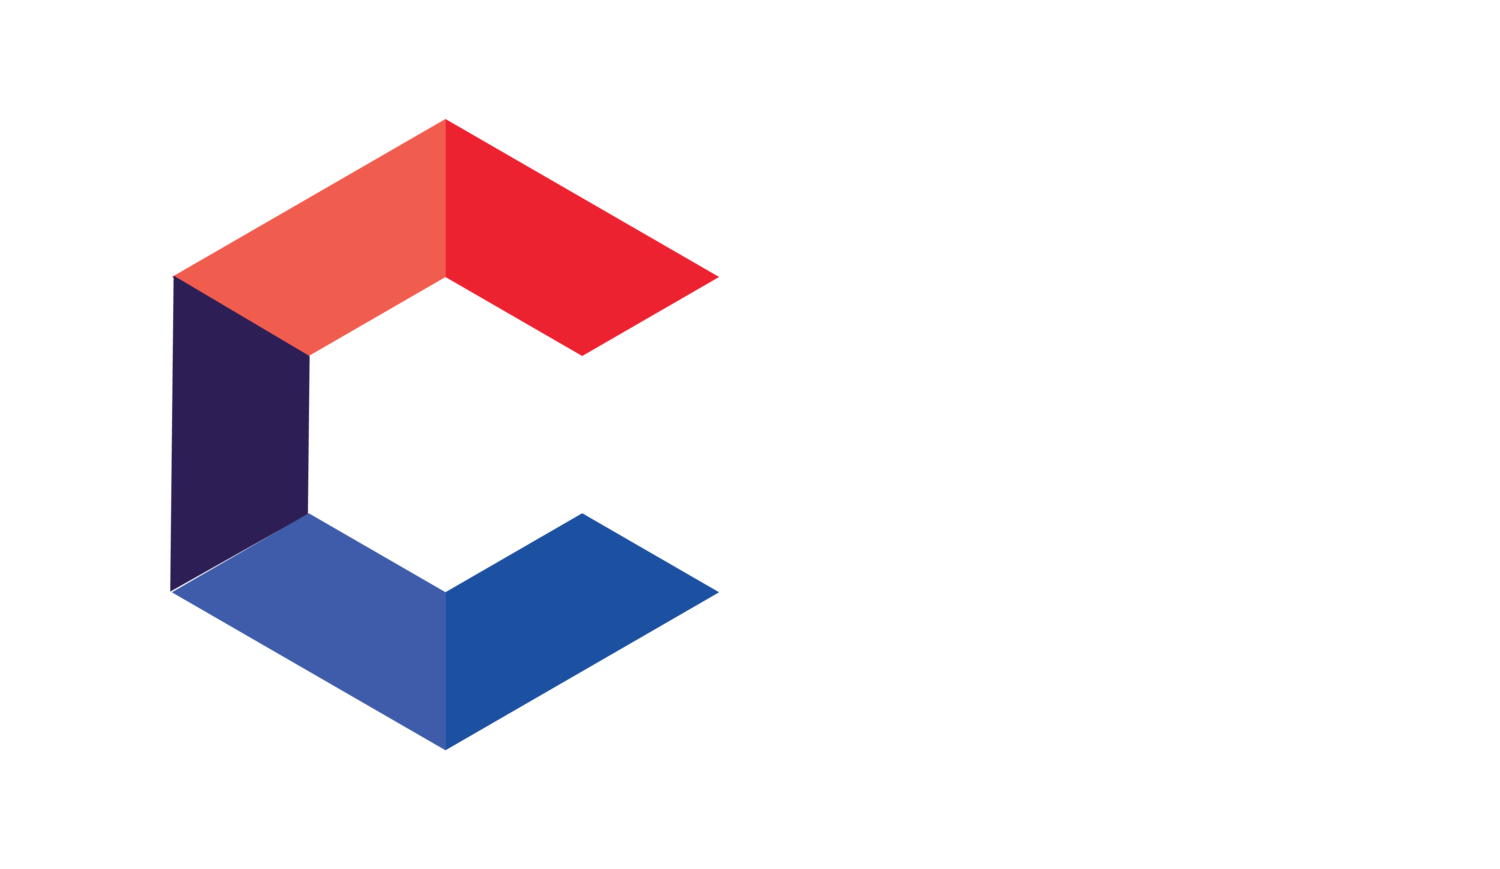 Collegiate Penetration Testing Competition